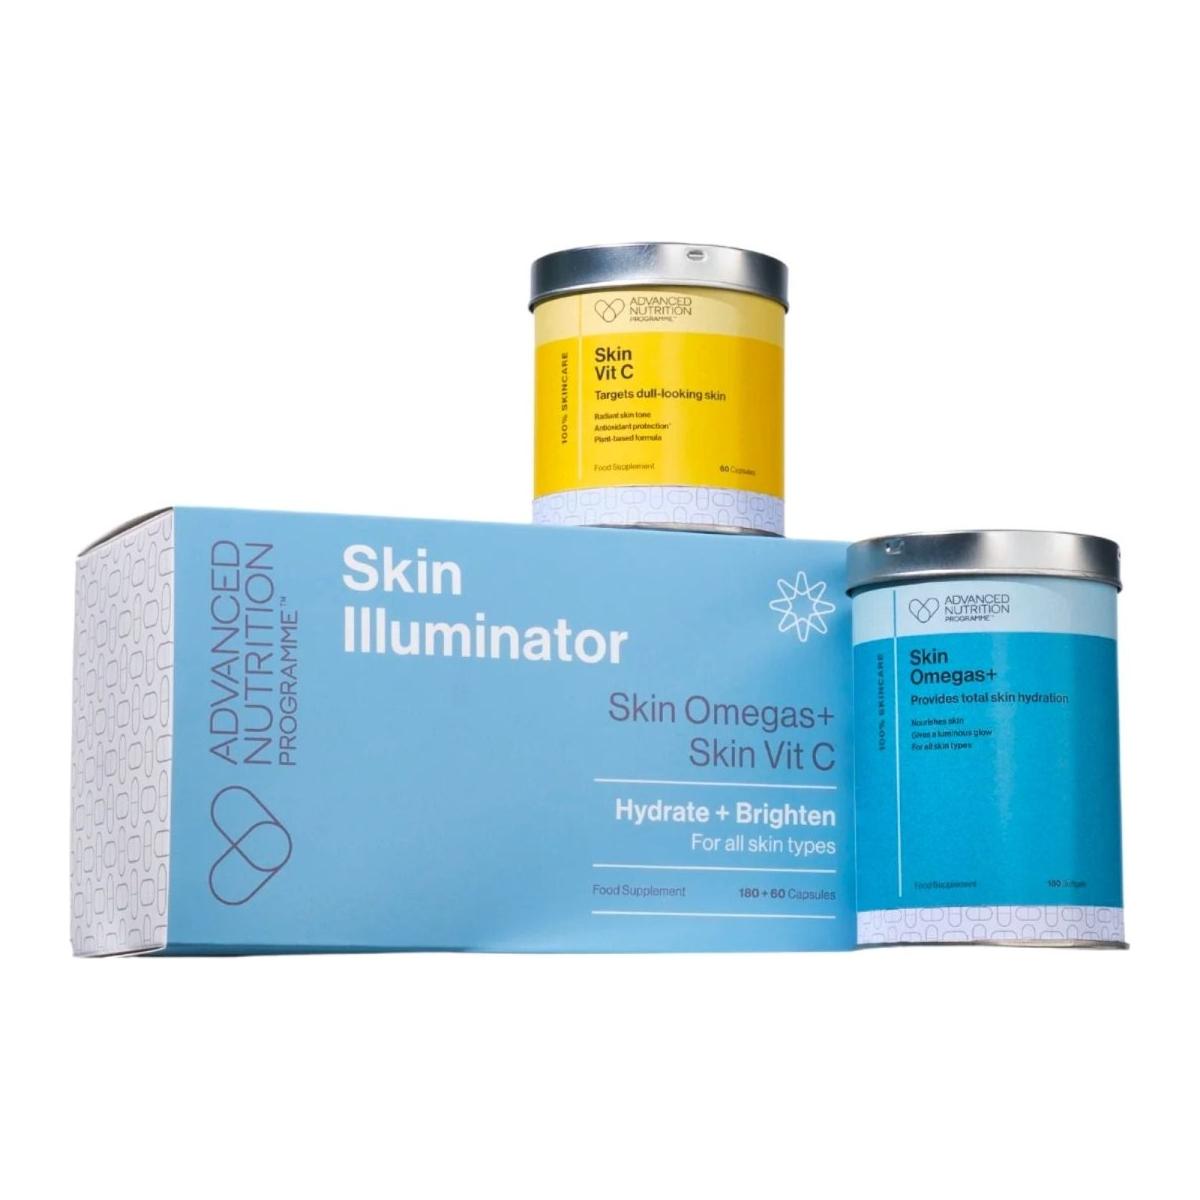 Advanced Nutrition Programme | Skin Illuminator Kit - DG International Ventures Limited